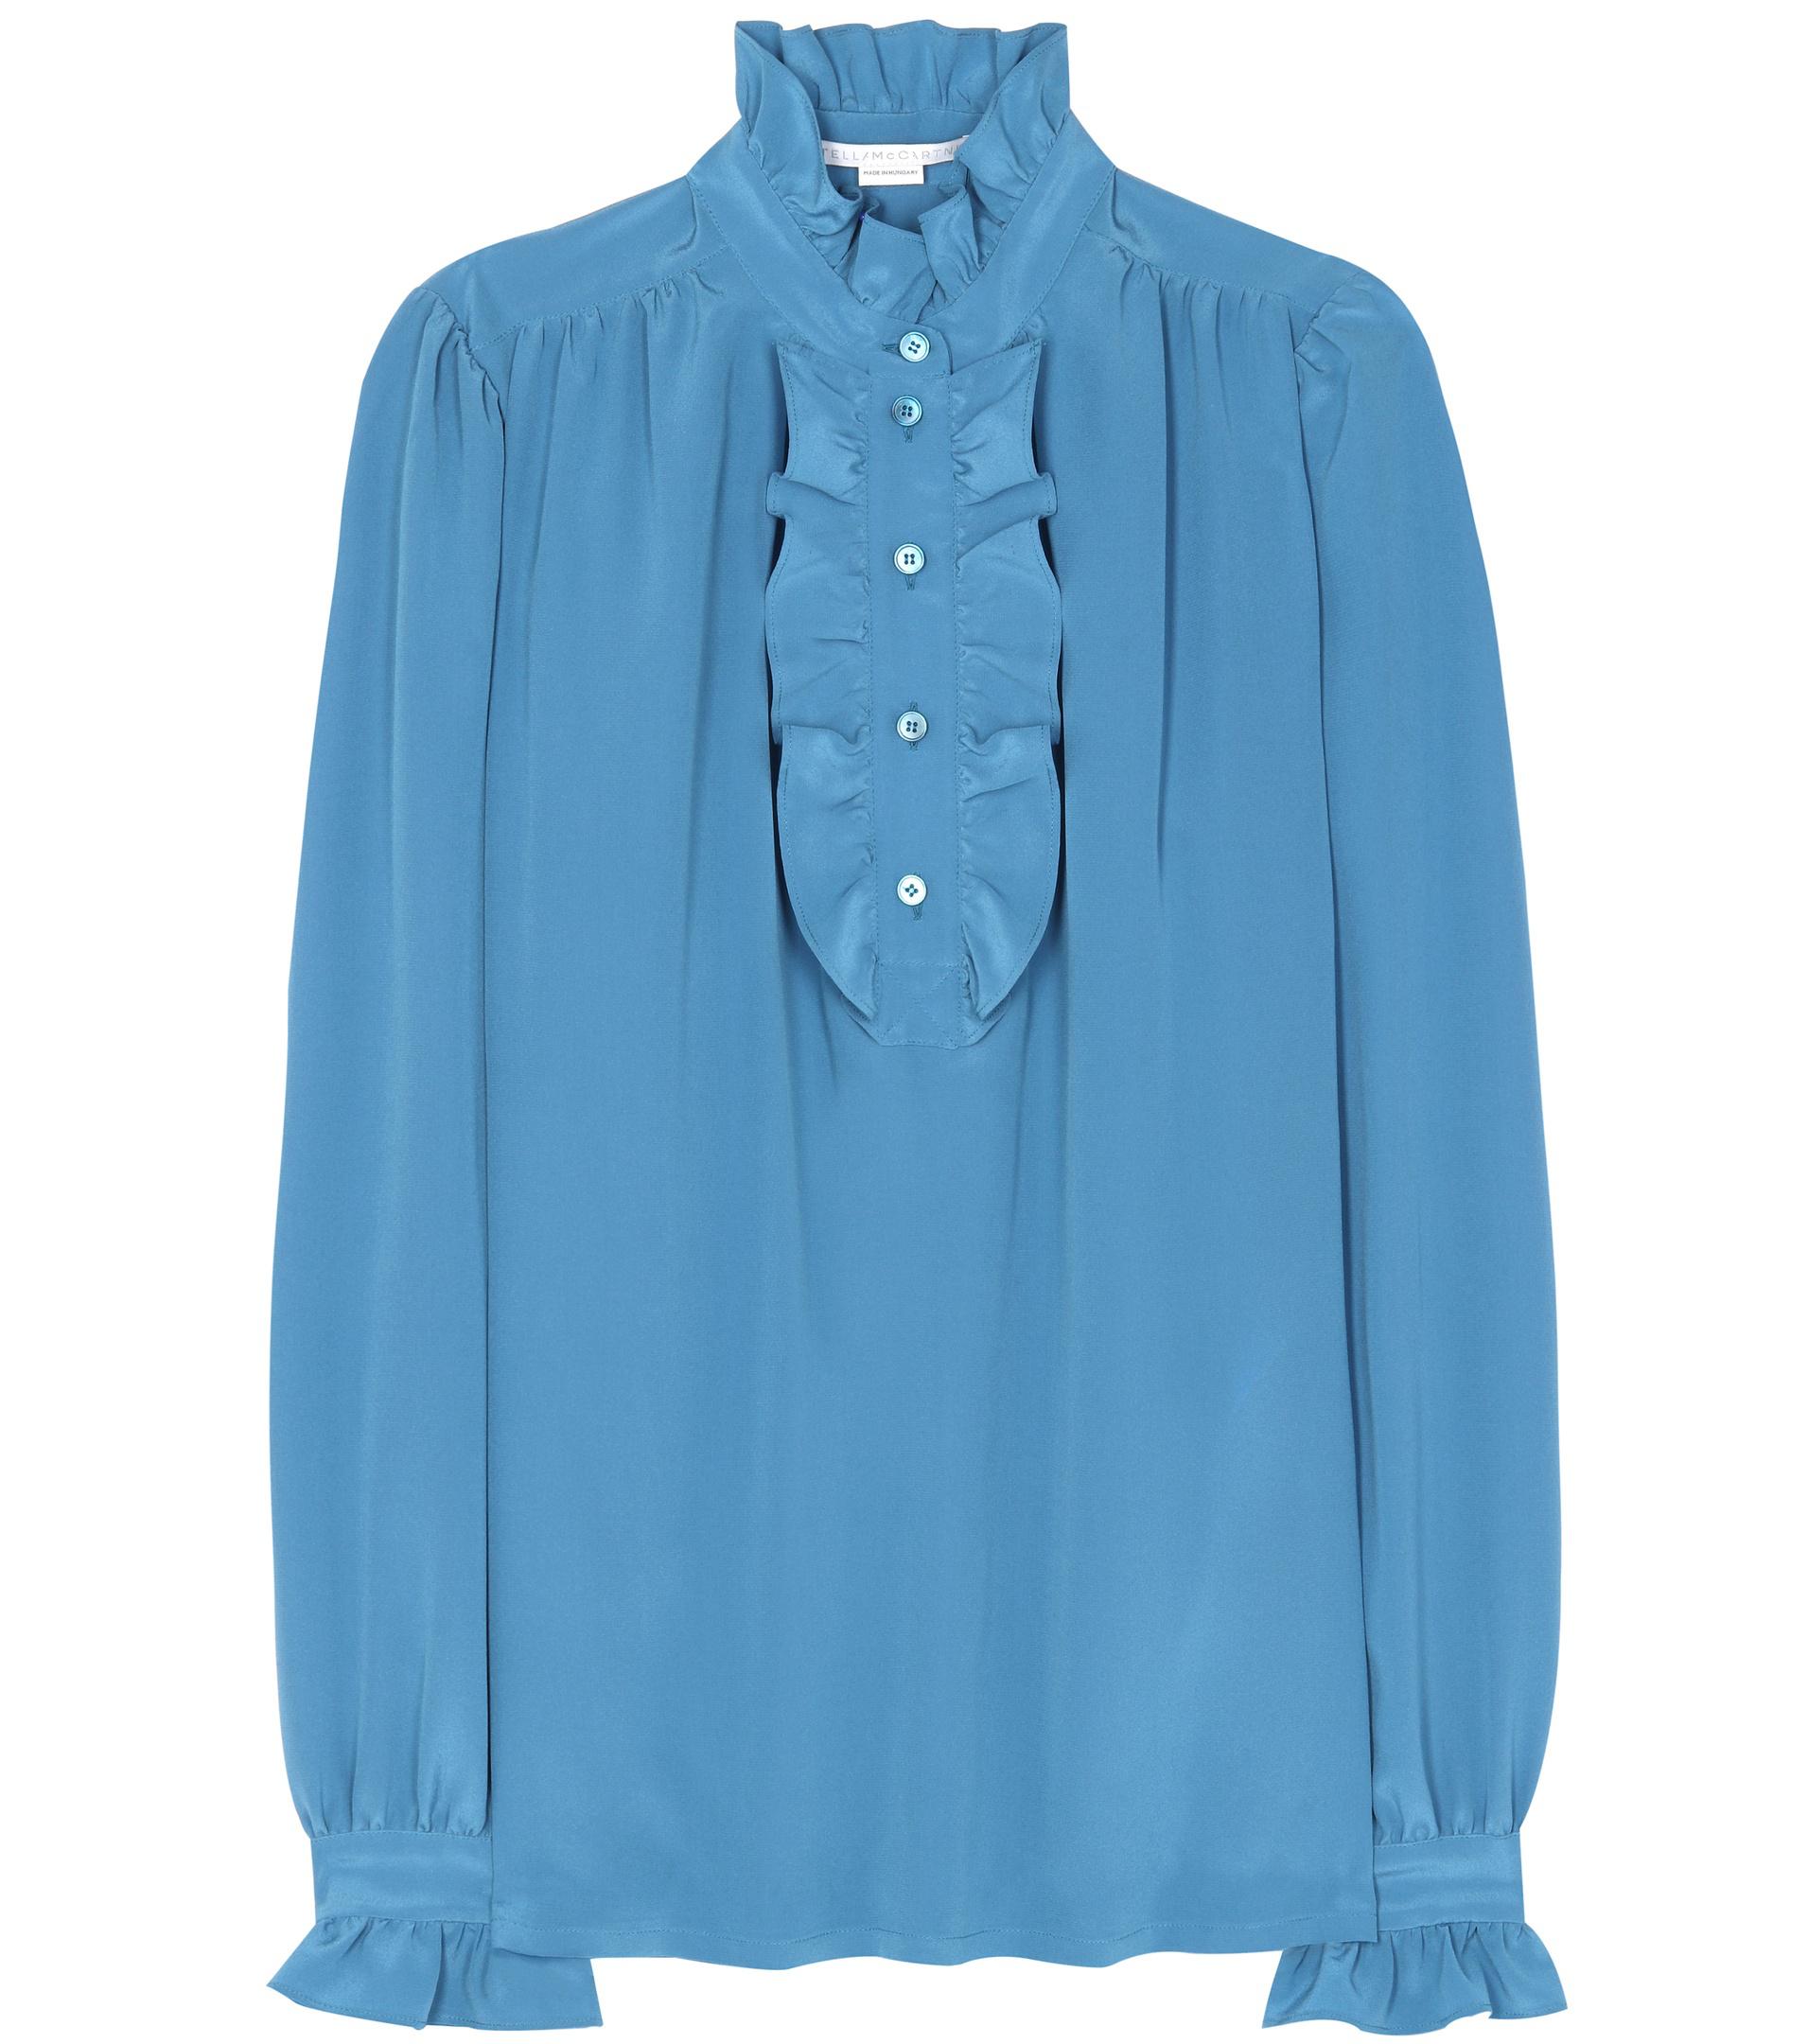 Lyst - Stella McCartney Silk Blouse in Blue - Save 30%